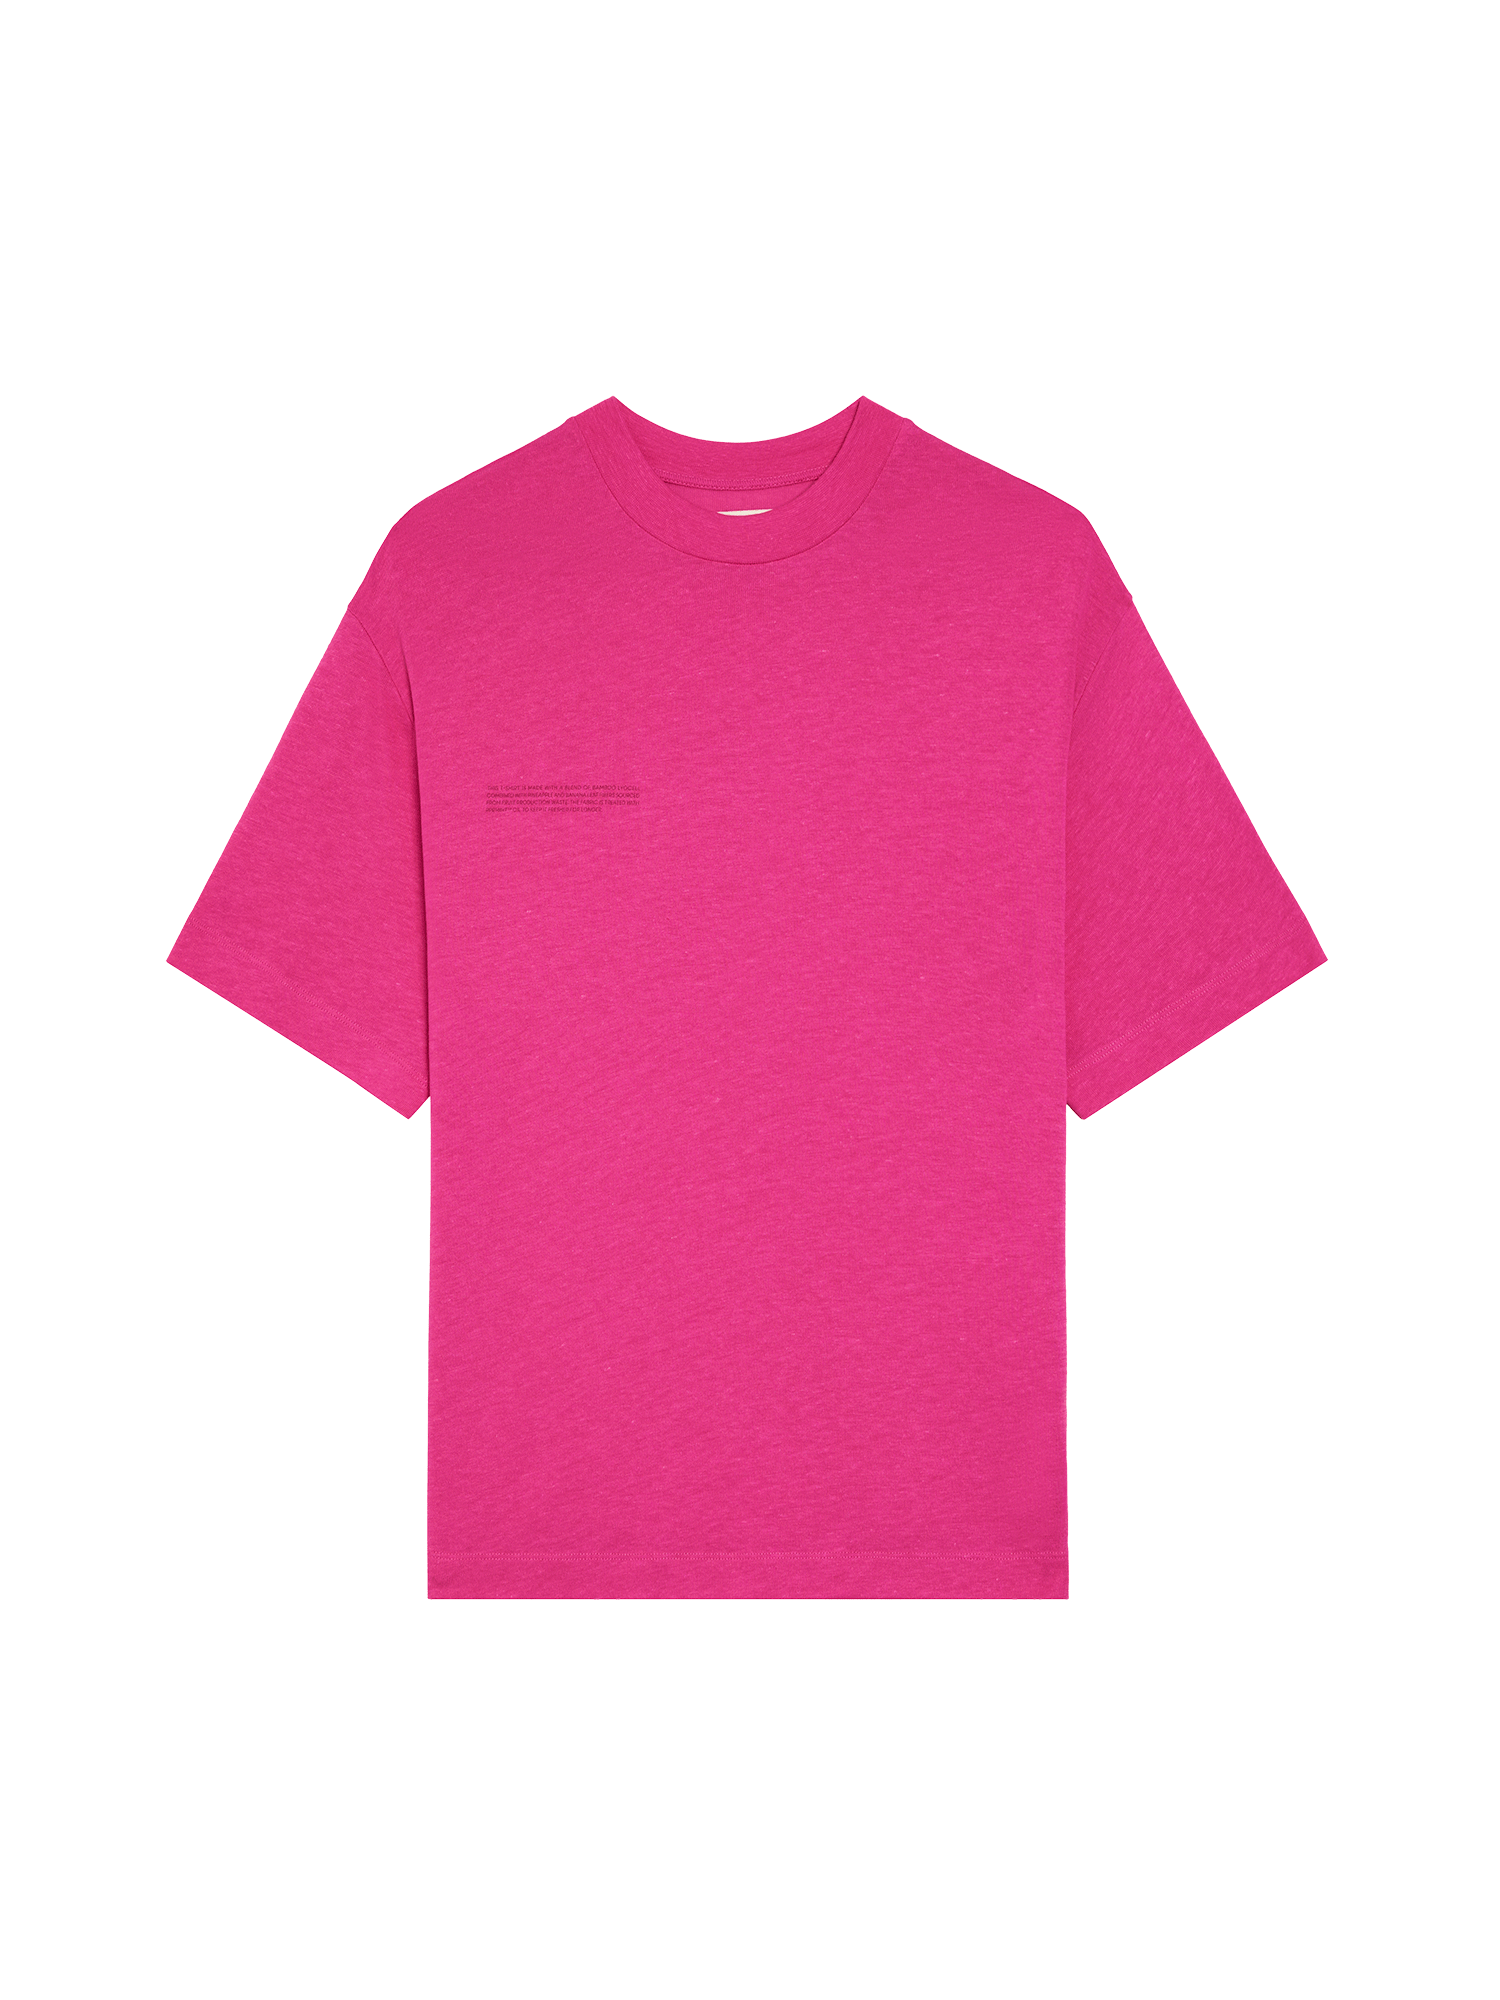 Frutfiber-Skater-T-Shirt-Tourmaline-Pink-packshot-3